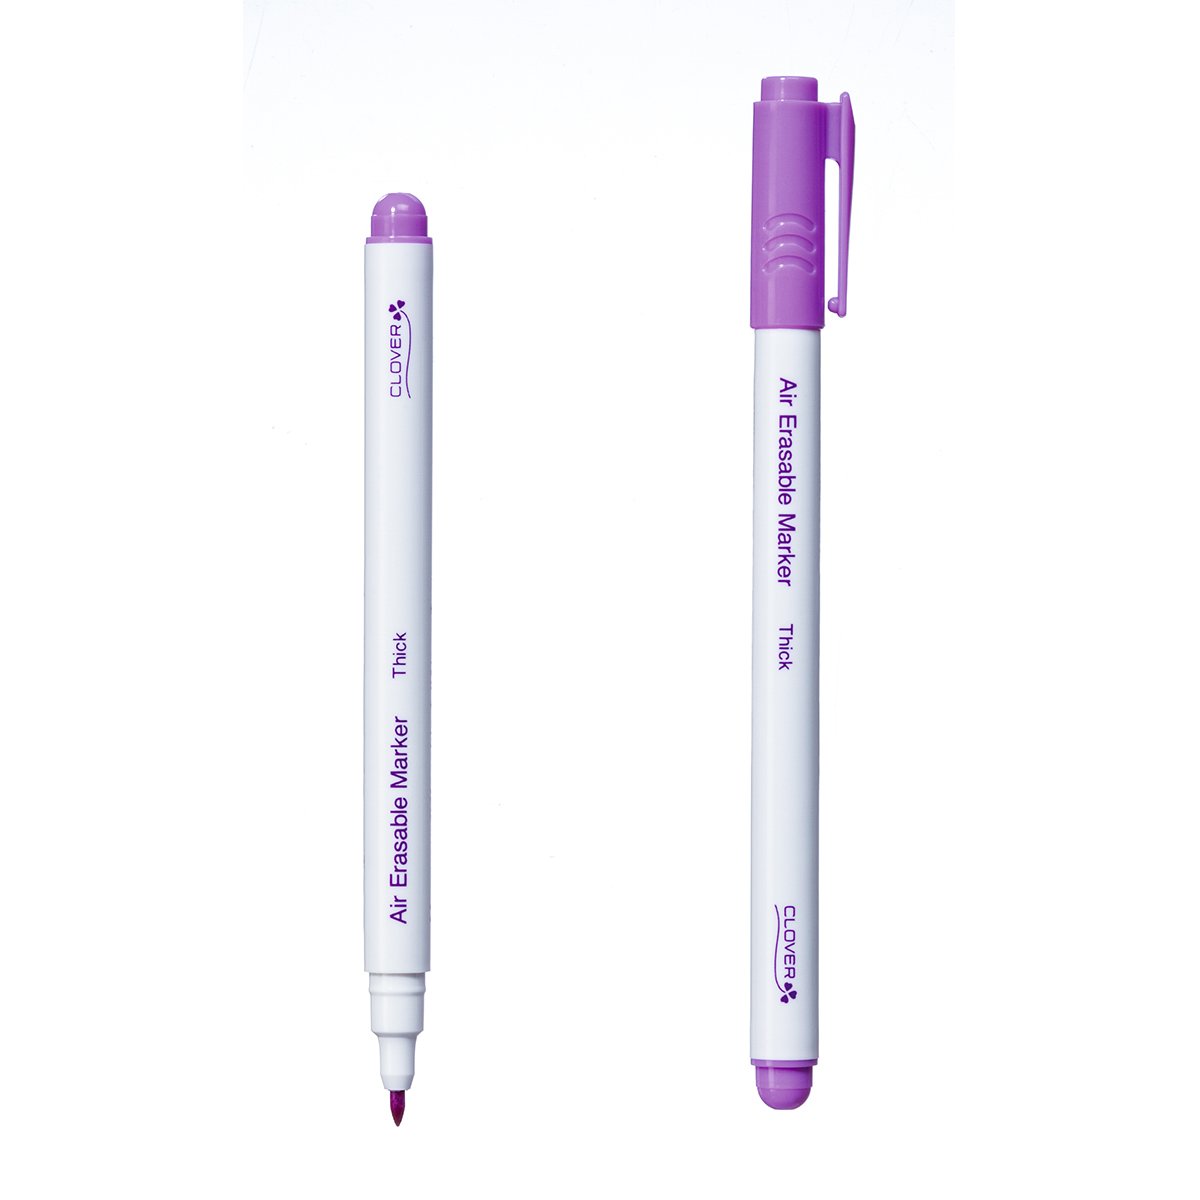 CLV - Air Erasable Marker - Thick - Purple